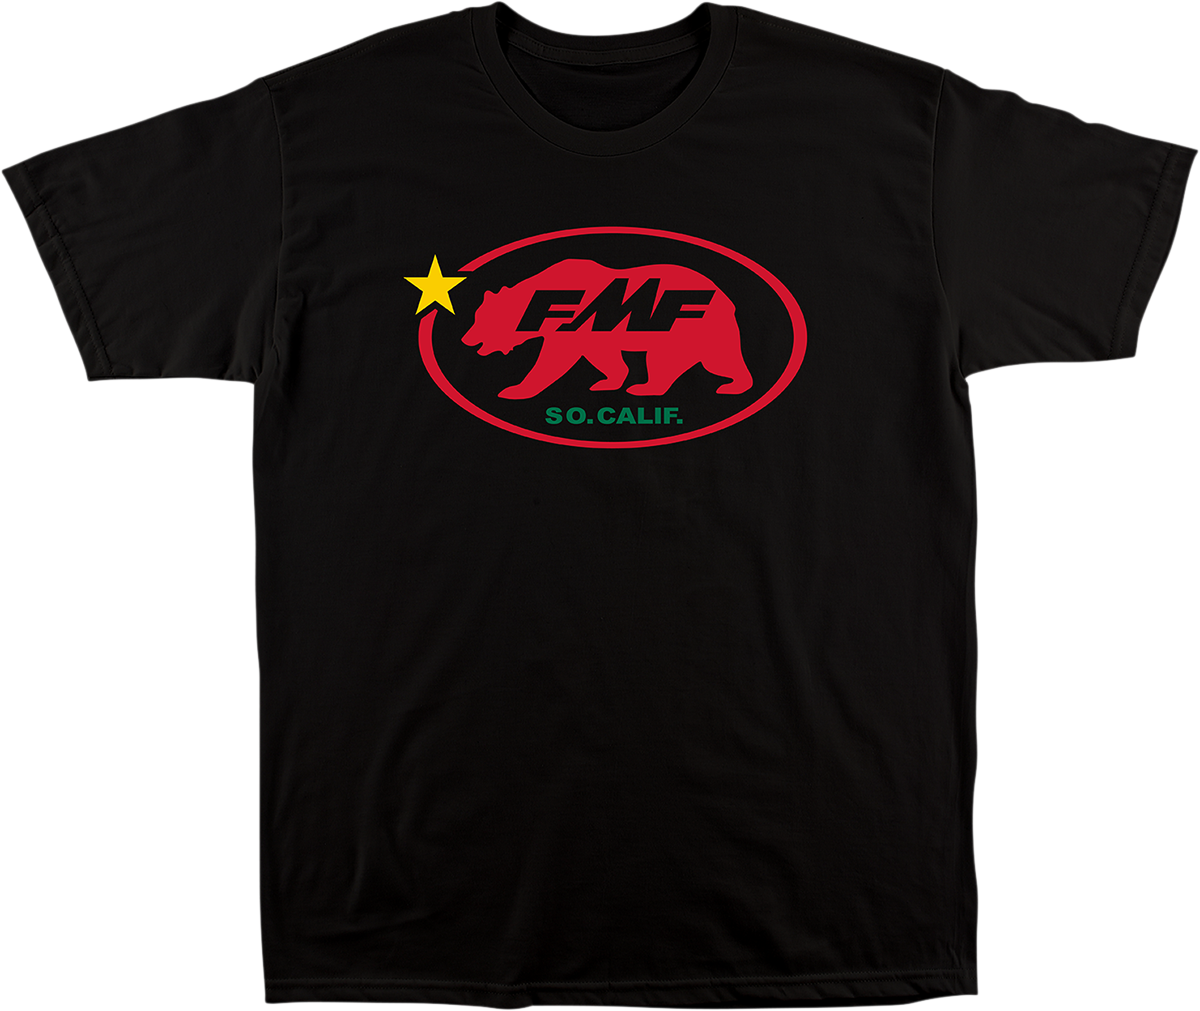 FMF Republic of Exhaust T-Shirt - Black - Medium SU21118907BKMD 3030-20717